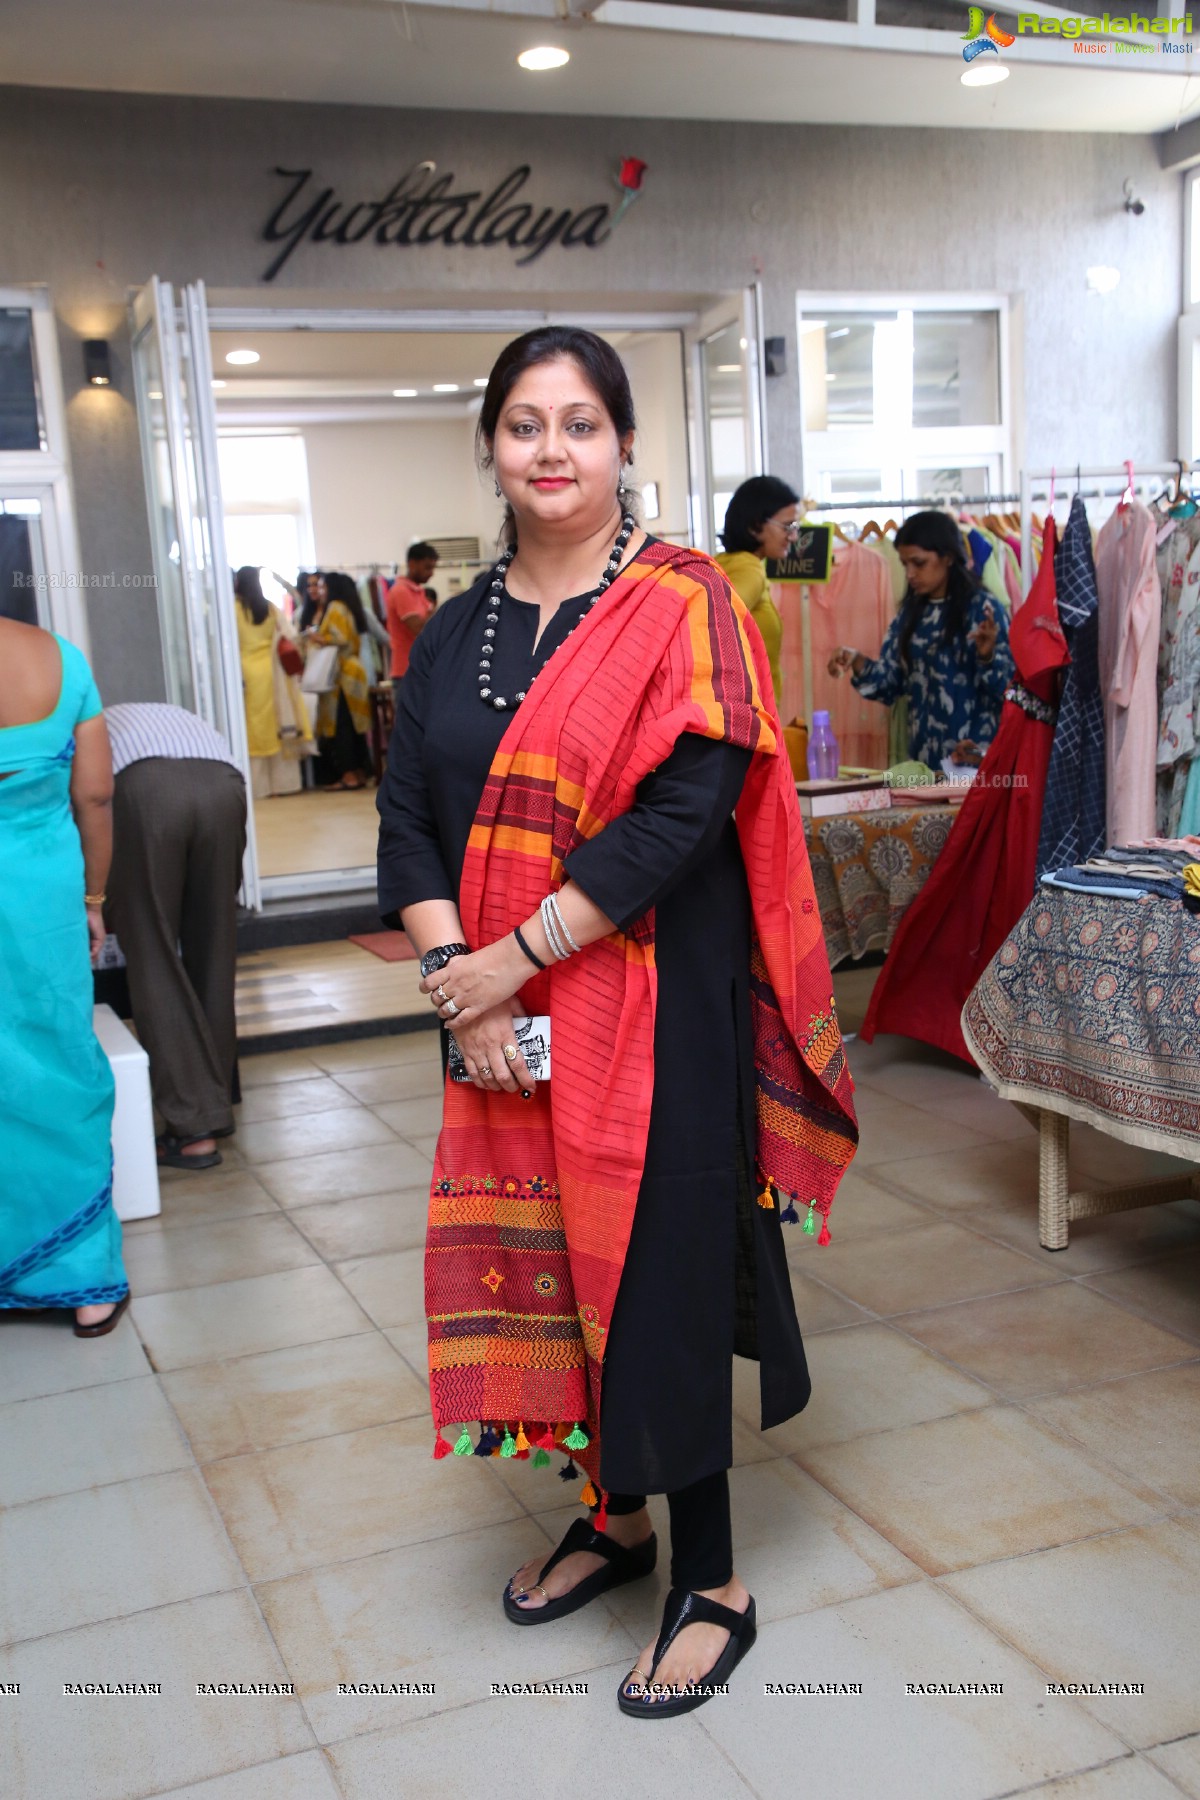 Vastraabharanam Exhibition & Sale of Jewellery and Clothing @ Yuktalaya, Madhapur, Hyderabad